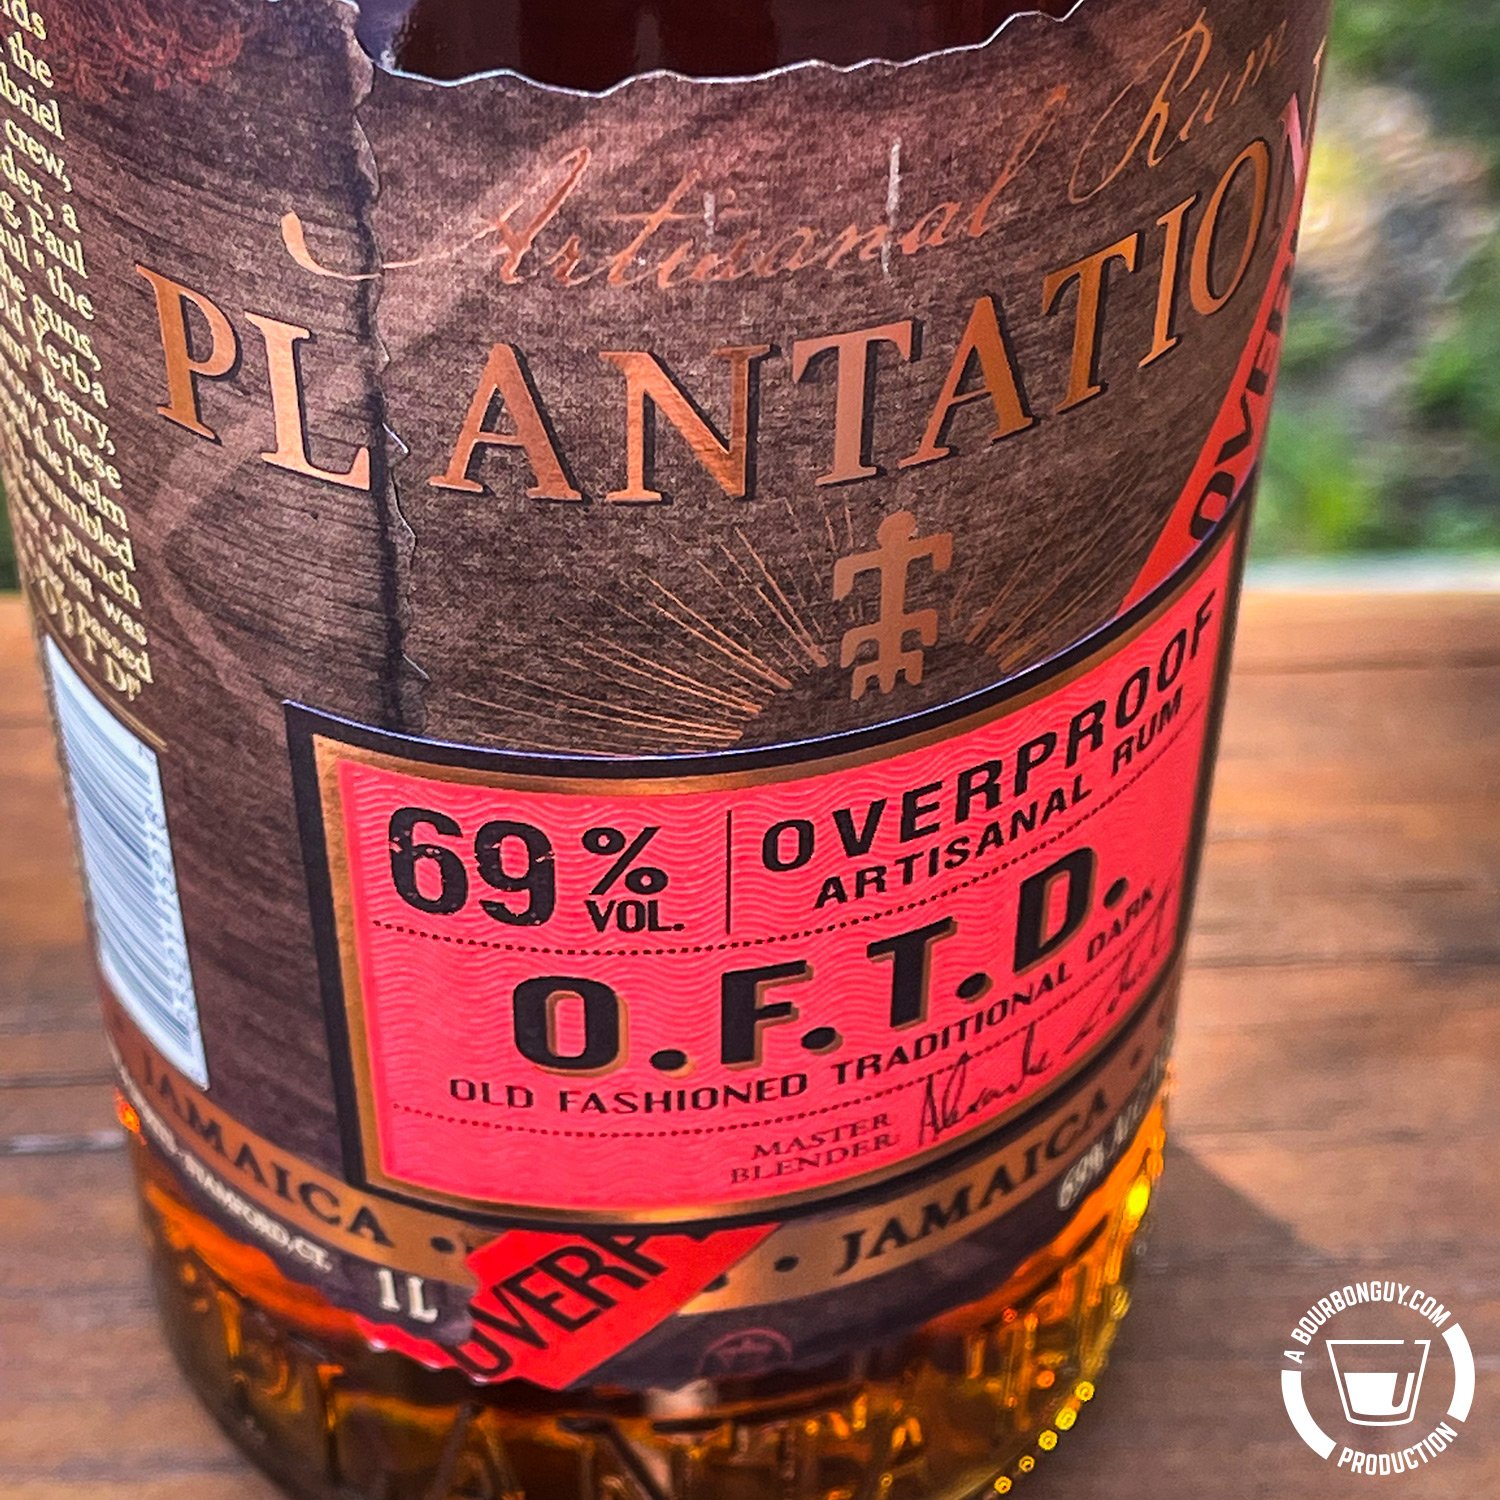 — 69% Plantation My BOURBON Overproof Rum Wandering O.F.T.D. GUY Eye: